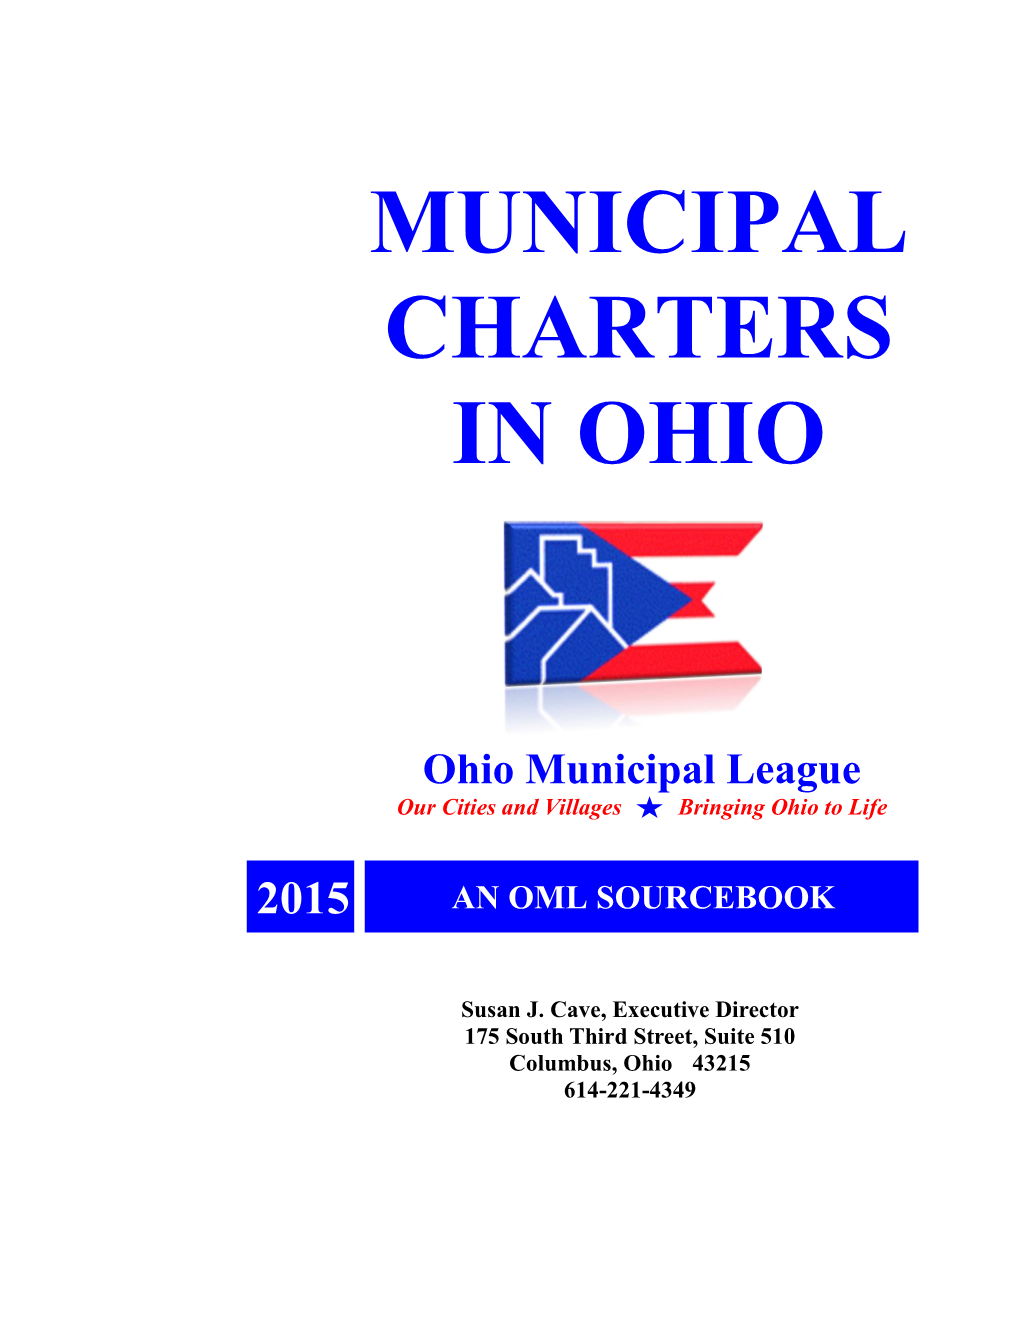 Municipal Charters in Ohio